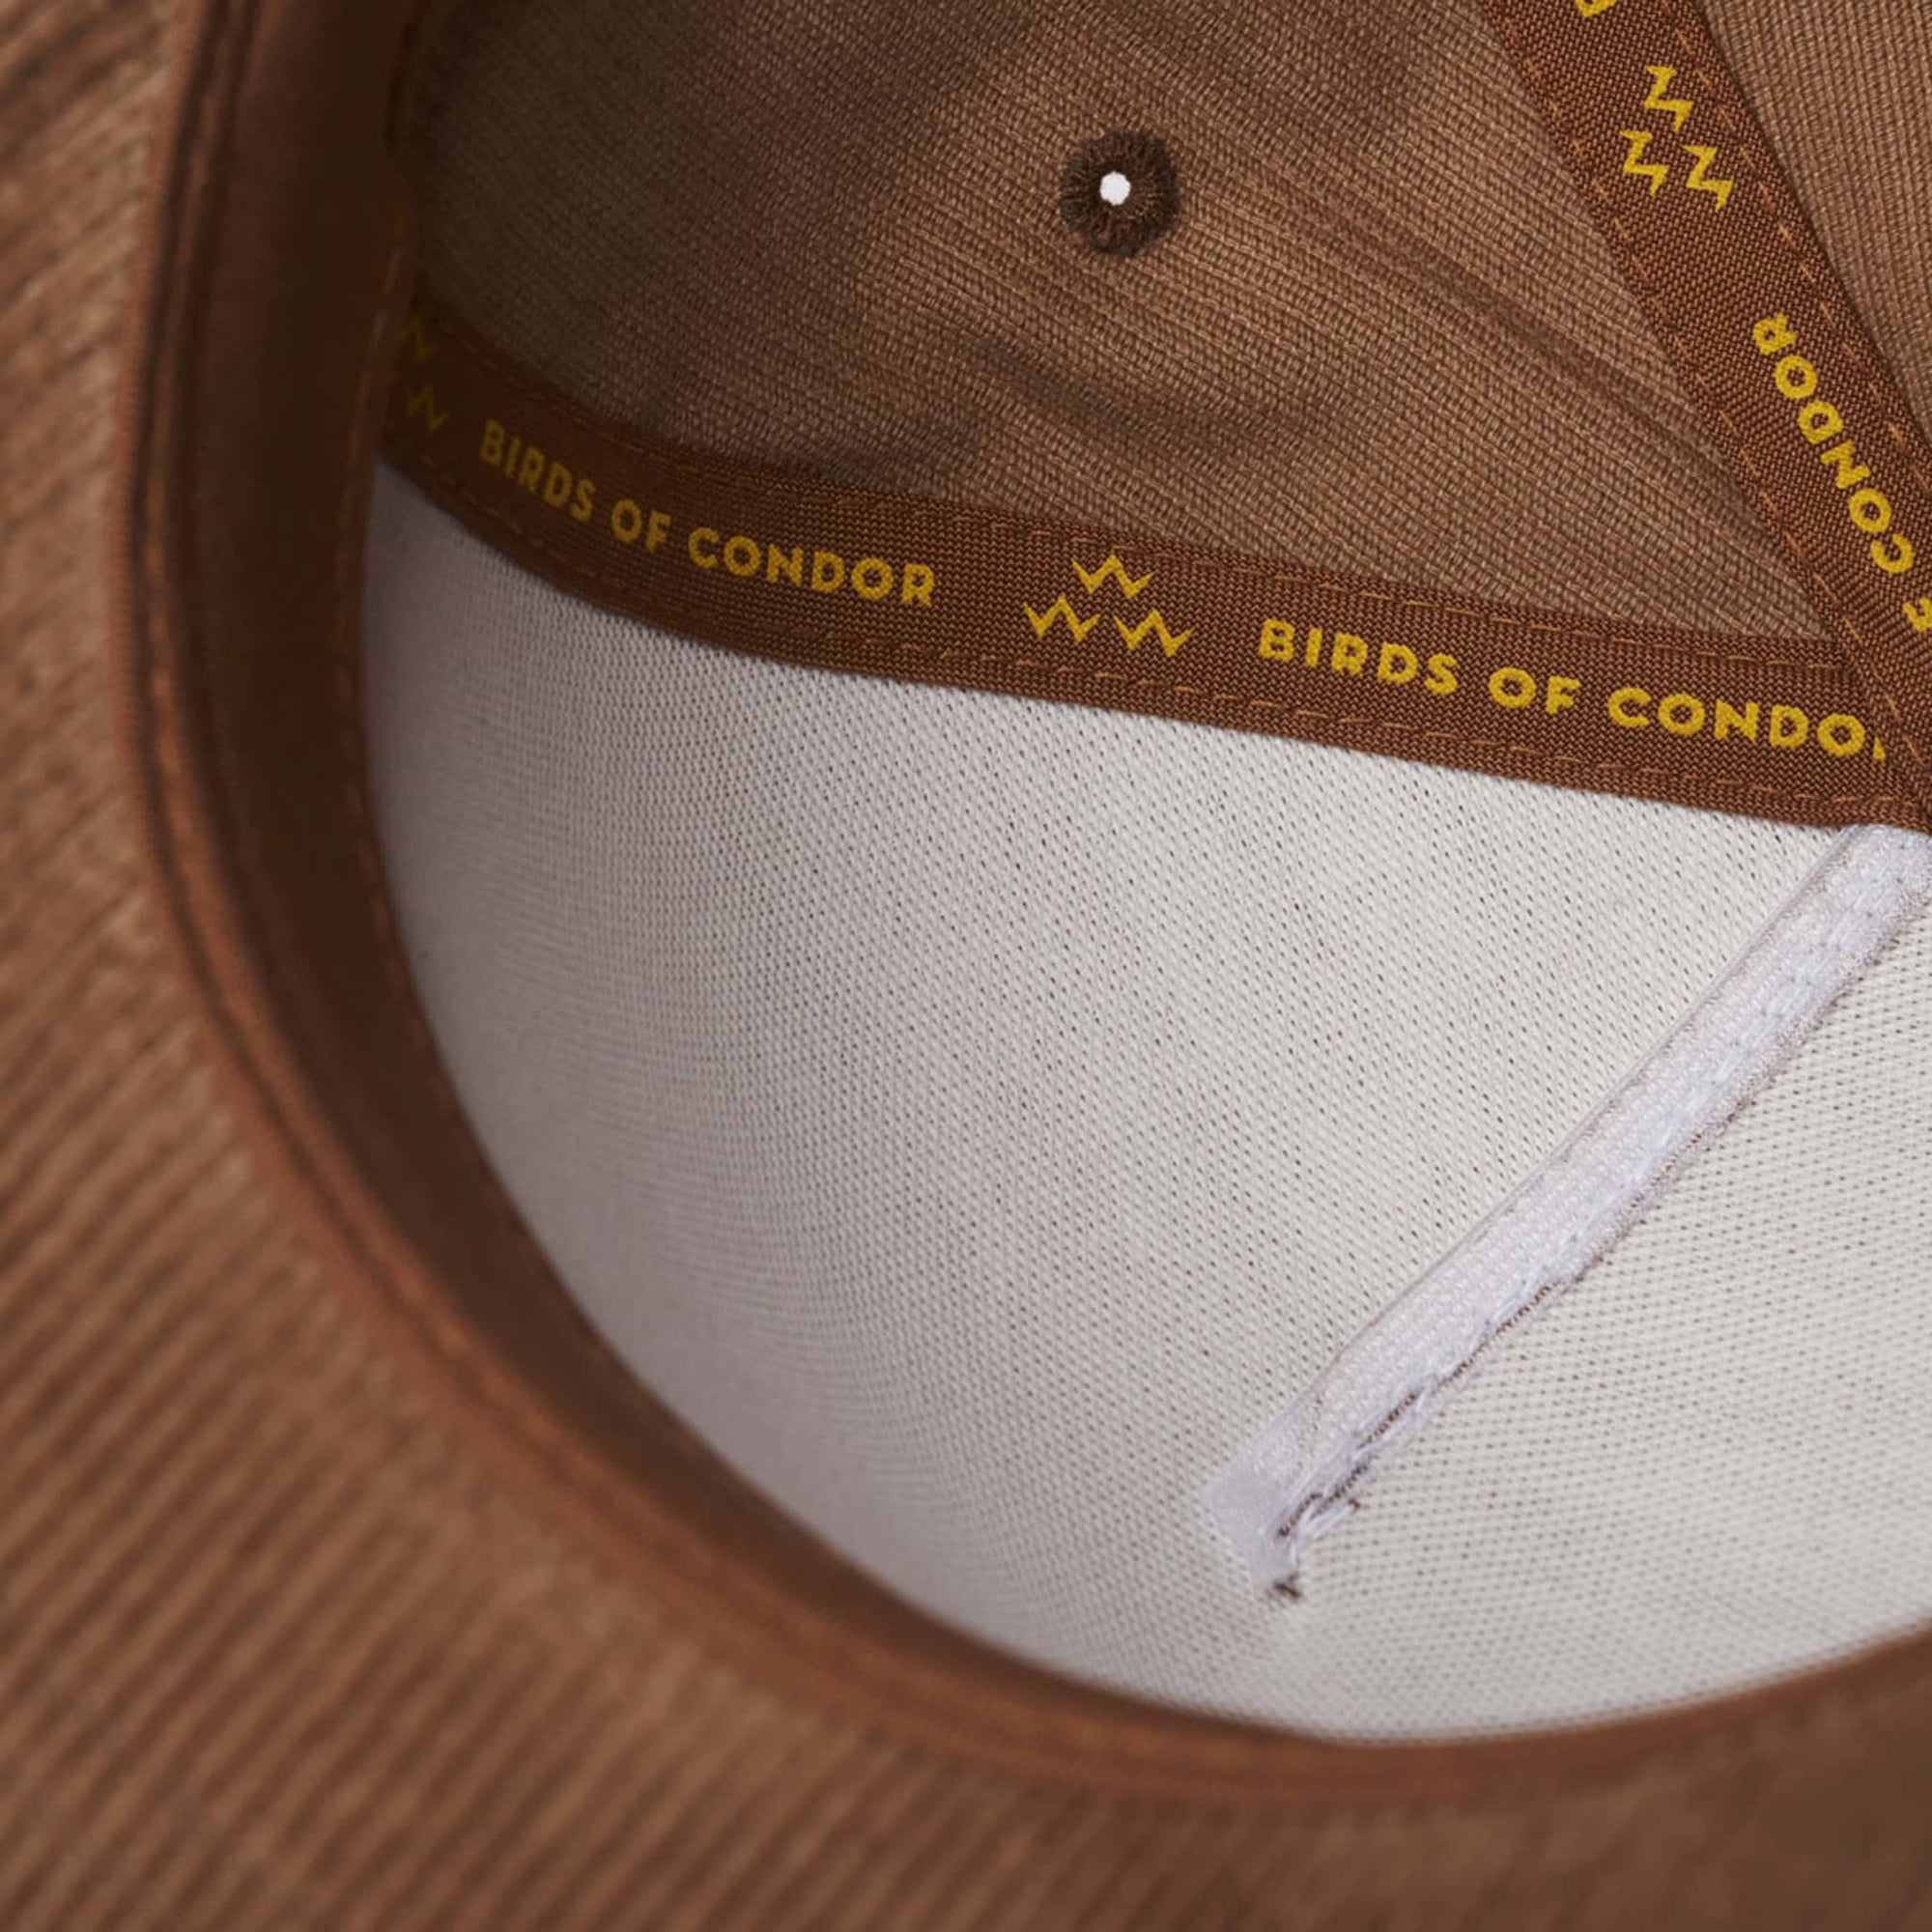 Golden Bear Snapback Hat - Brown Corduroy, Plastic Snap, Slight Curve Brim, 100% Cotton 5 Panel, OSFA (Suitable for Larger Heads), Front View